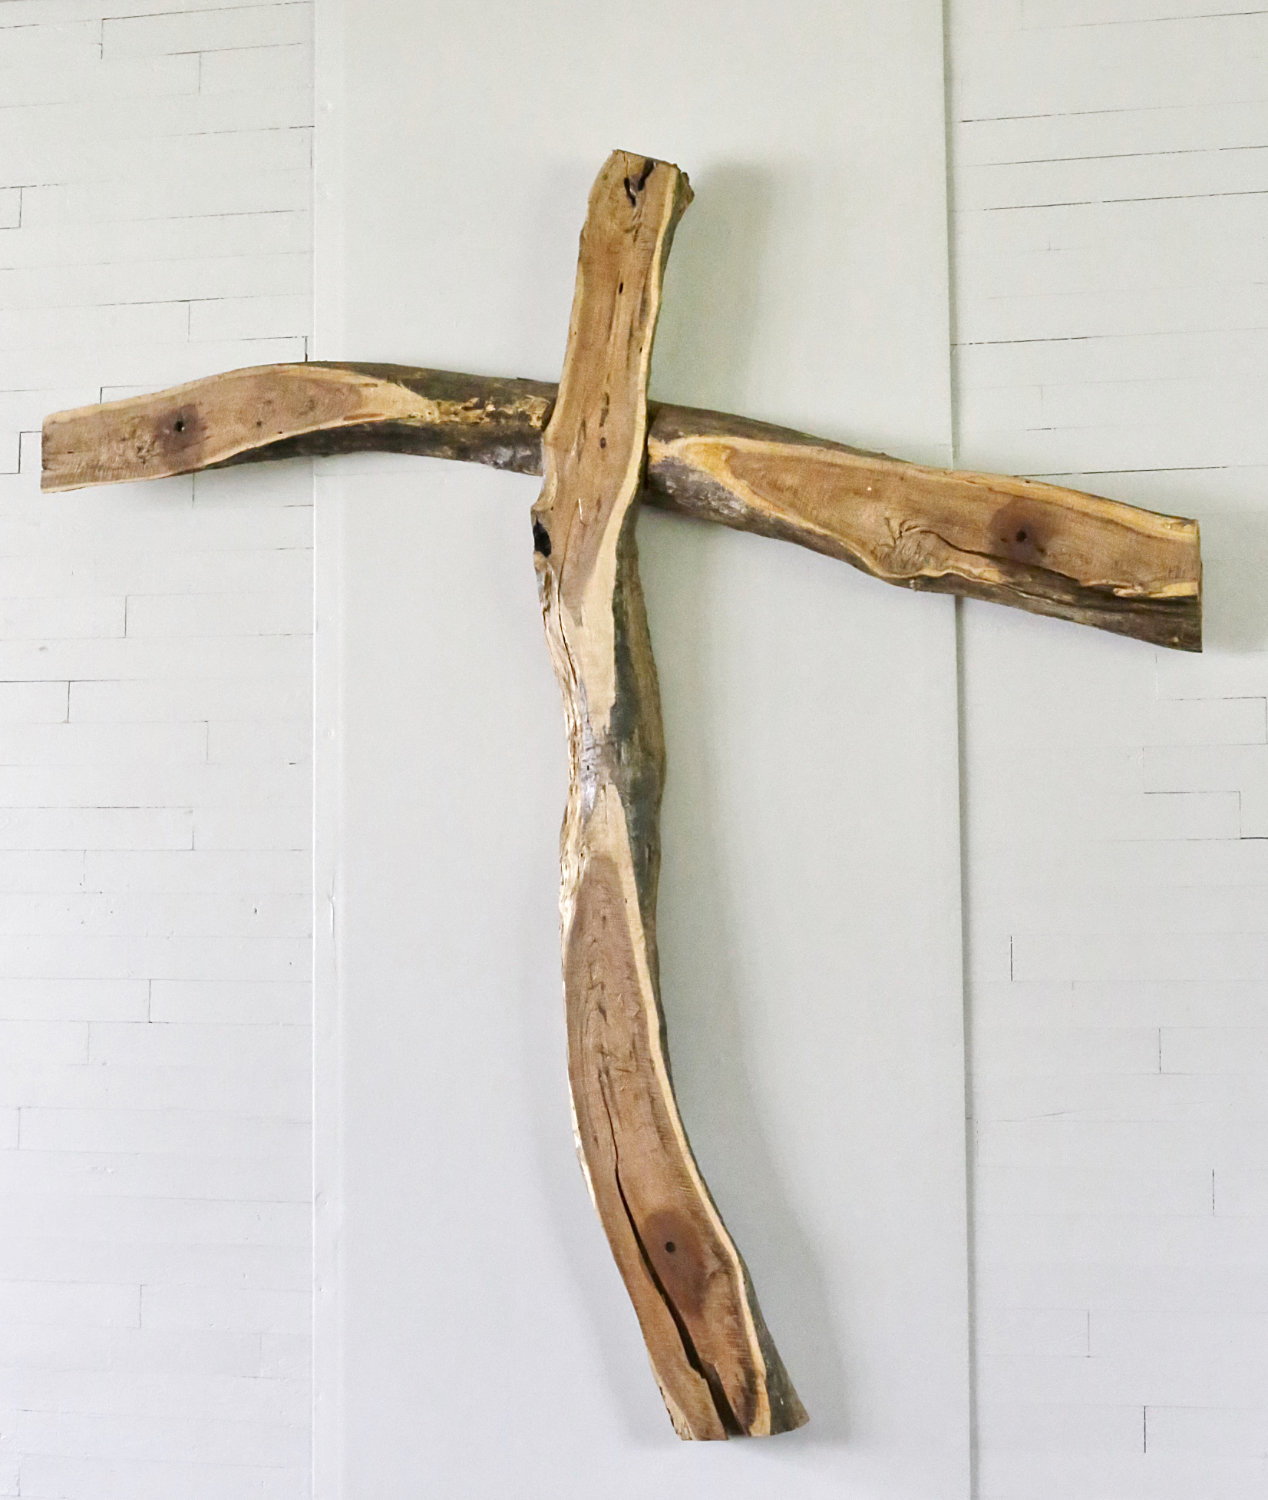 The living cross at Seymore Bible Fellowship